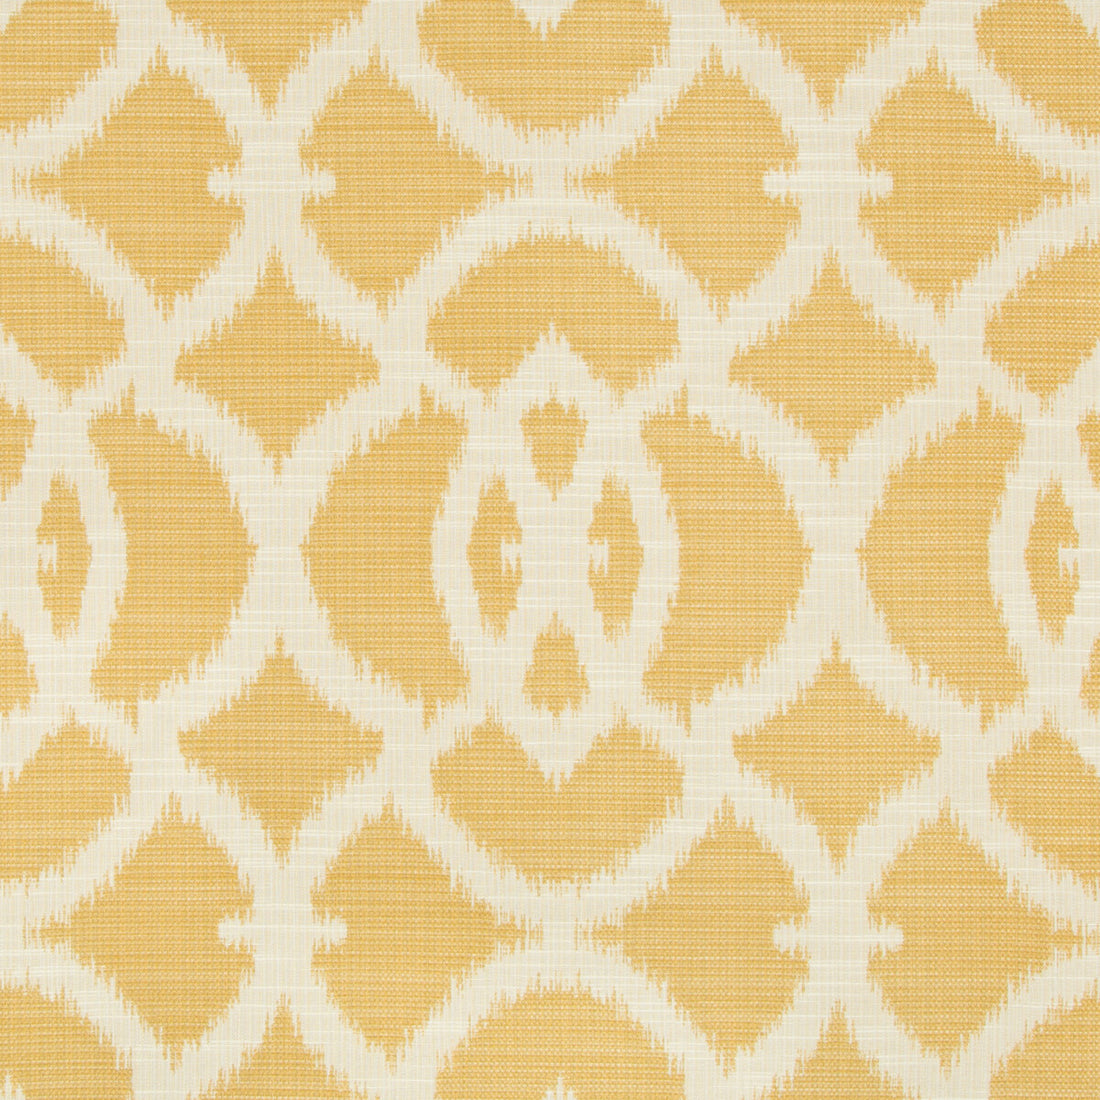 Kravet Design fabric in 34721-4 color - pattern 34721.4.0 - by Kravet Design in the Gis collection